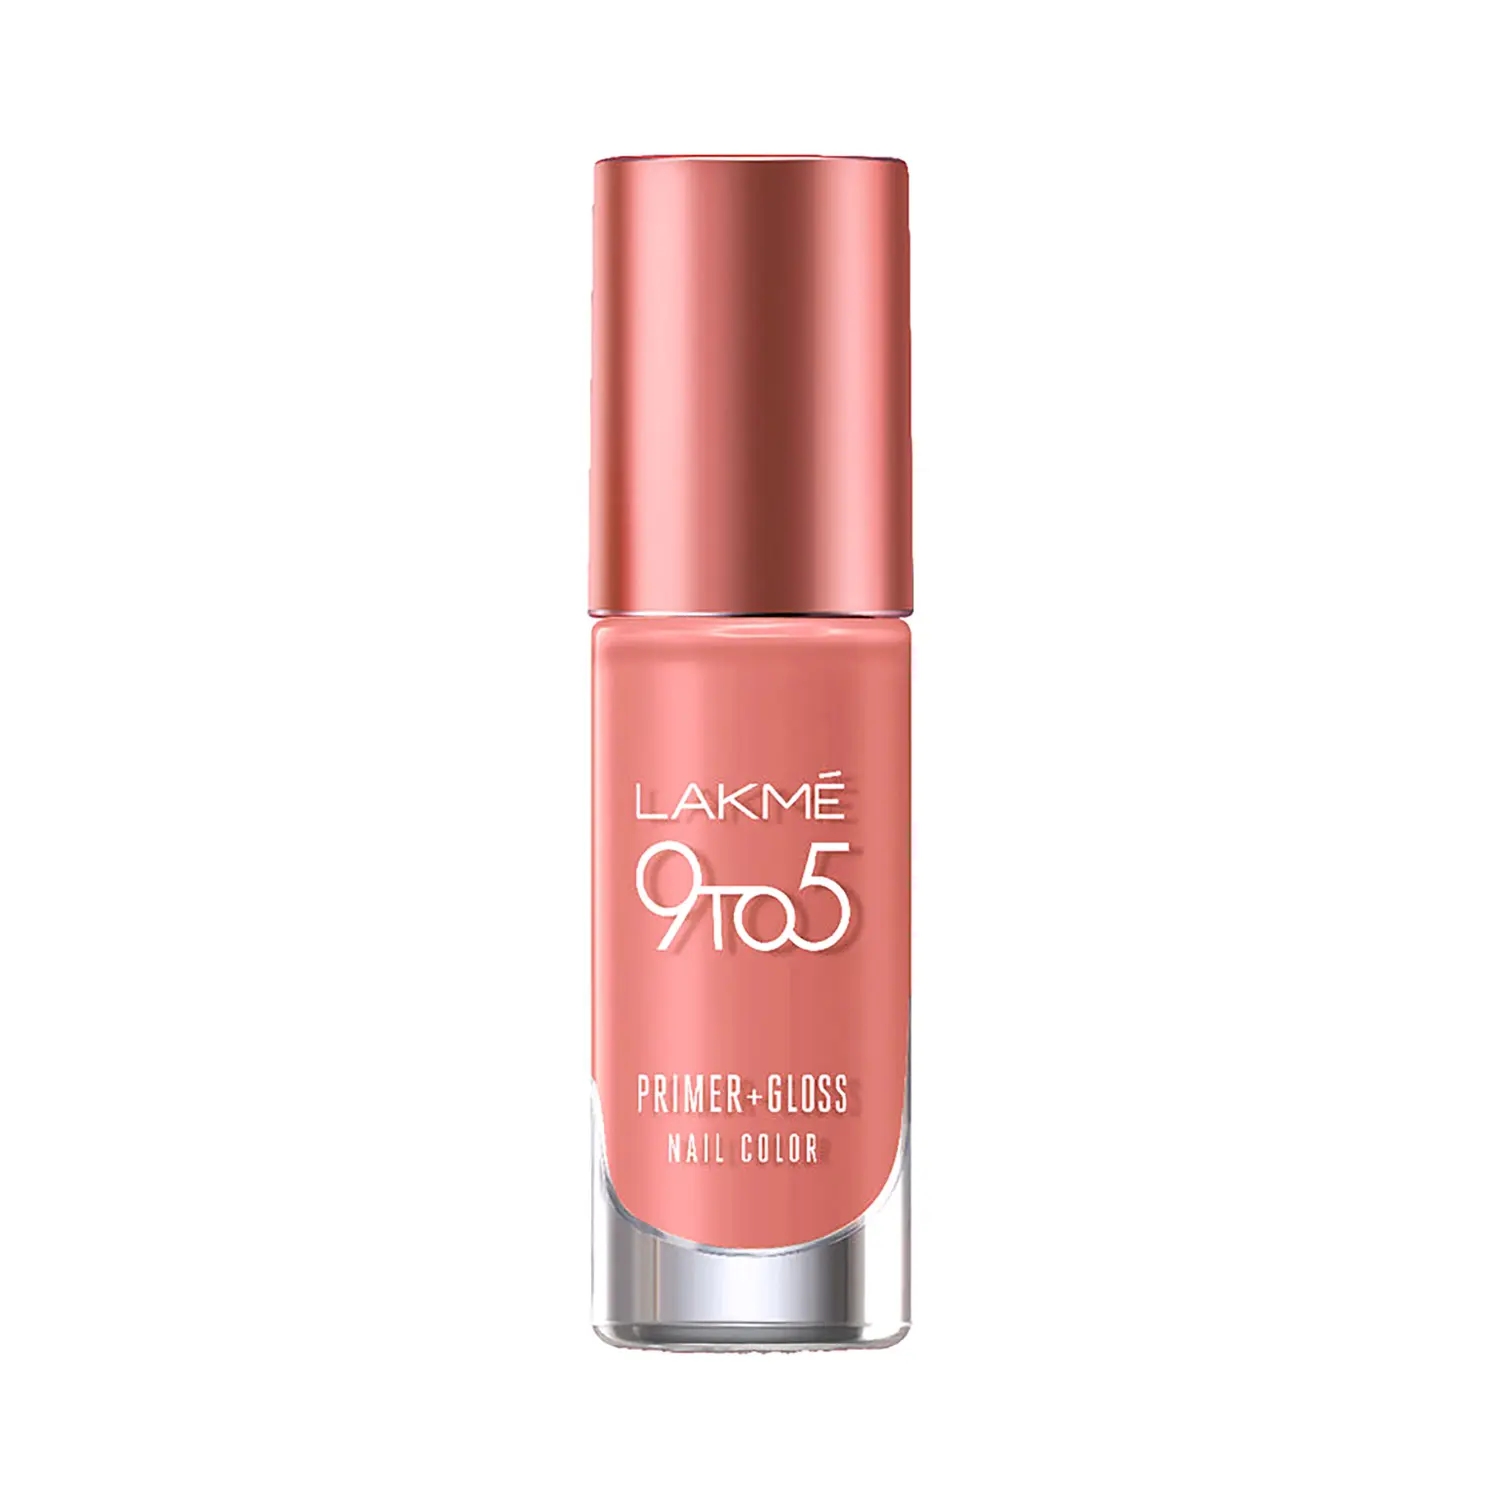 Lakme | Lakme 9To5 Primer + Gloss Nail Color - Peach Blossom 6ml